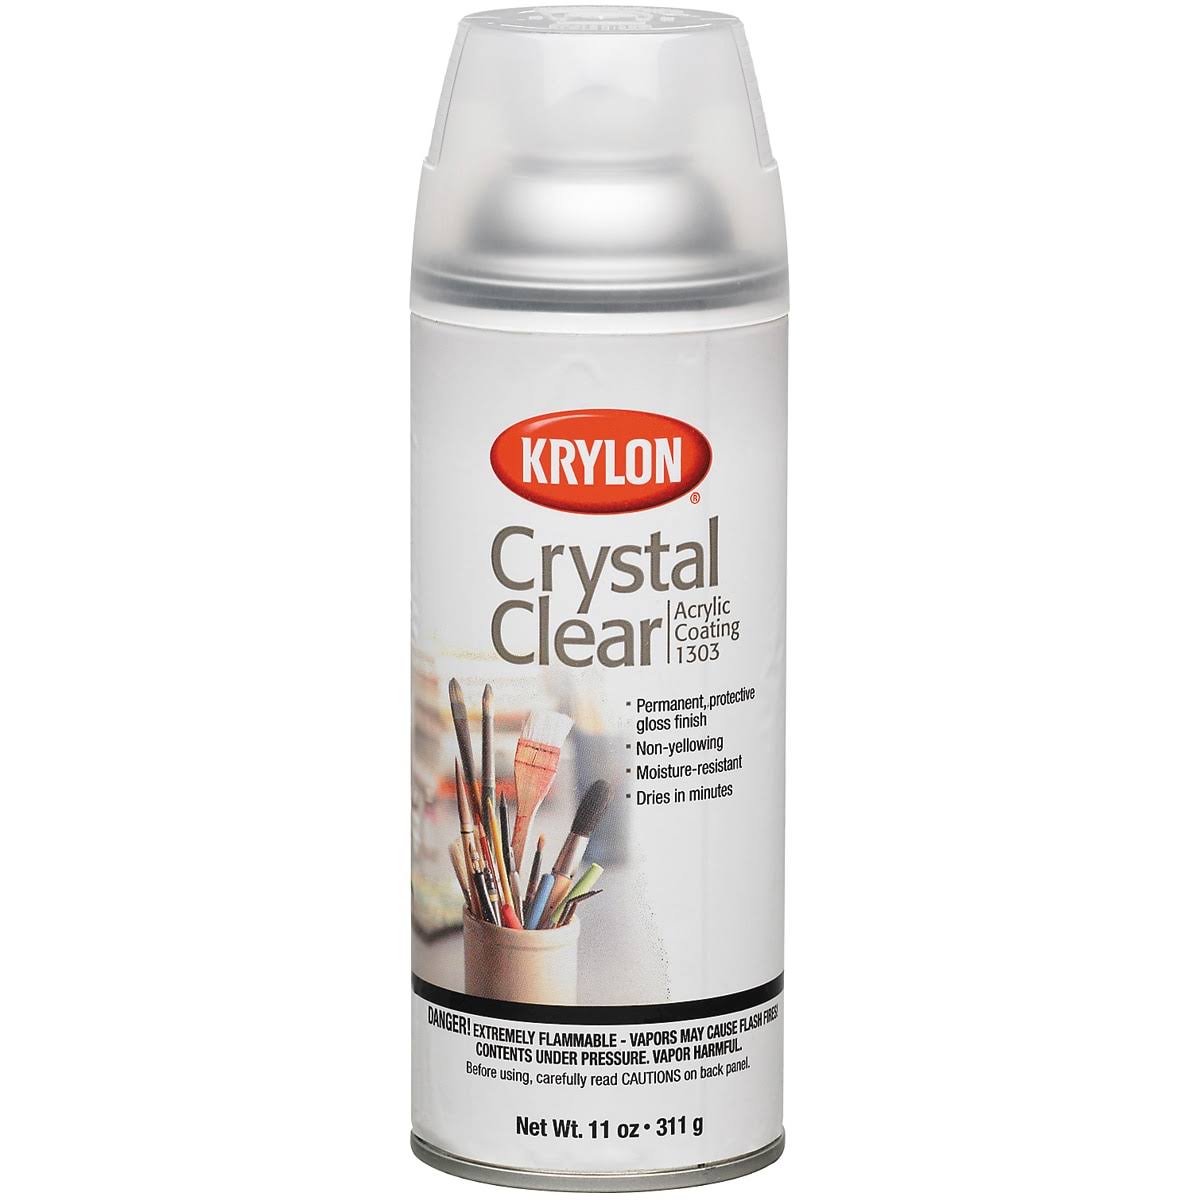 Krylon Acrylic Coating - 37g, Crystal Clear